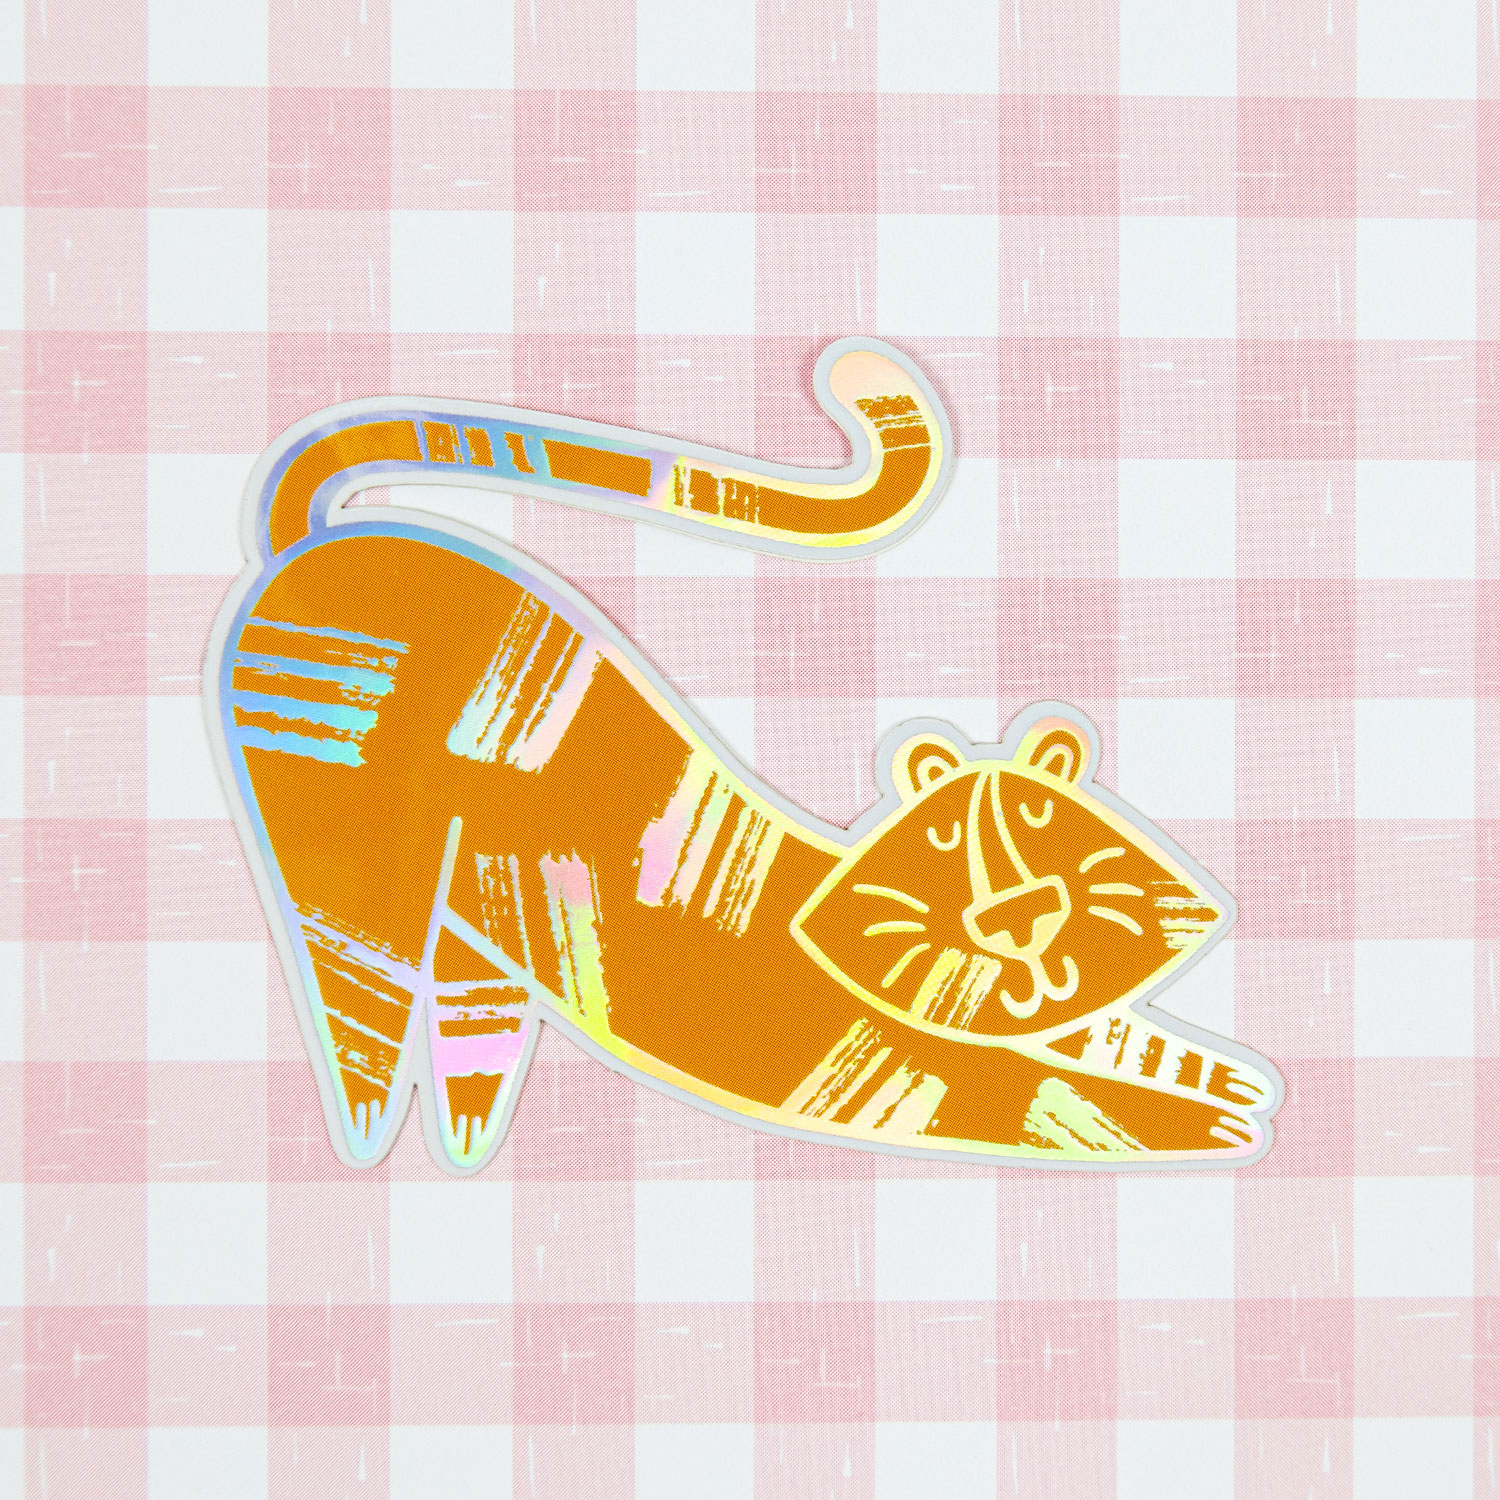 'Tiger' sticker